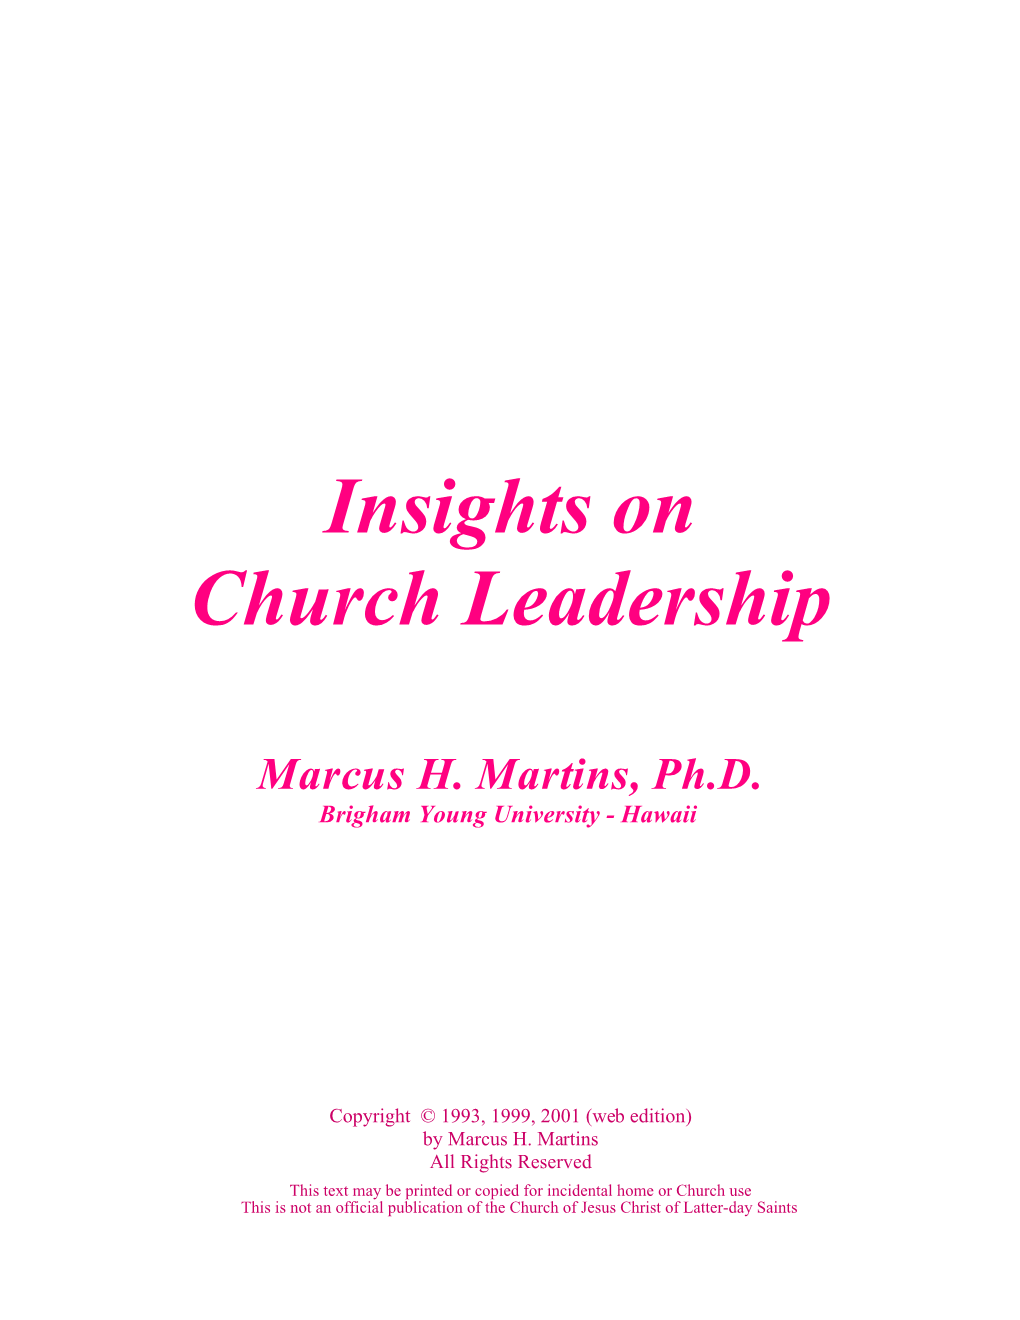 Insights on Church Leadership